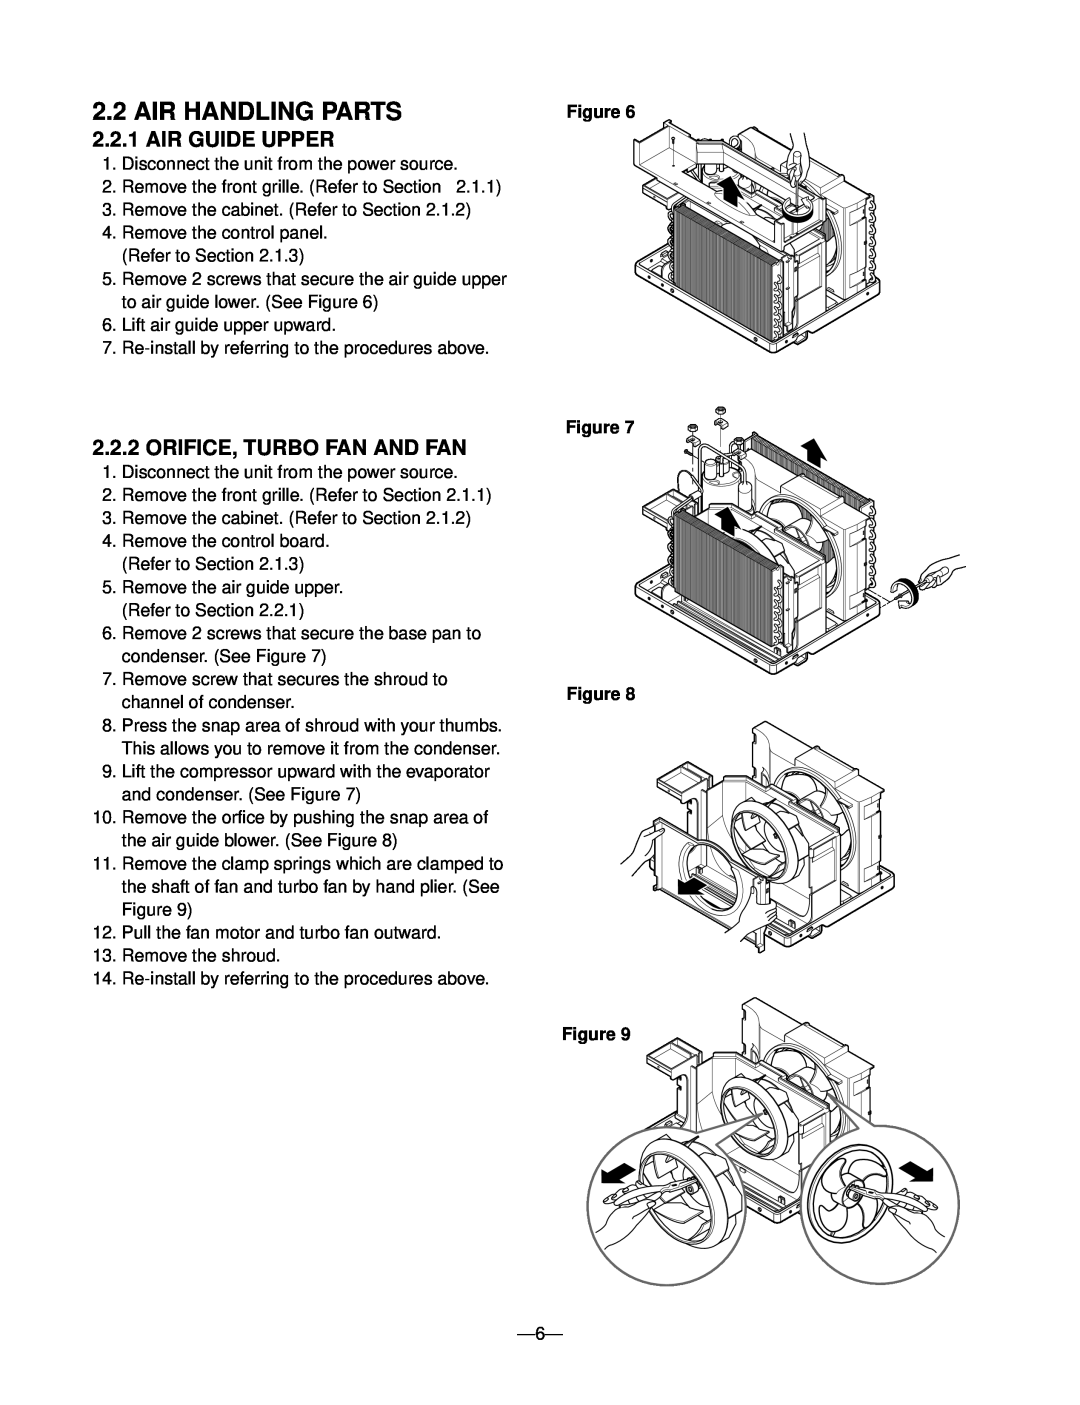 Friedrich ZQ05C10 manual Air Handling Parts, Air Guide Upper, Orifice, Turbo Fan And Fan, Figure Figure Figure Figure 